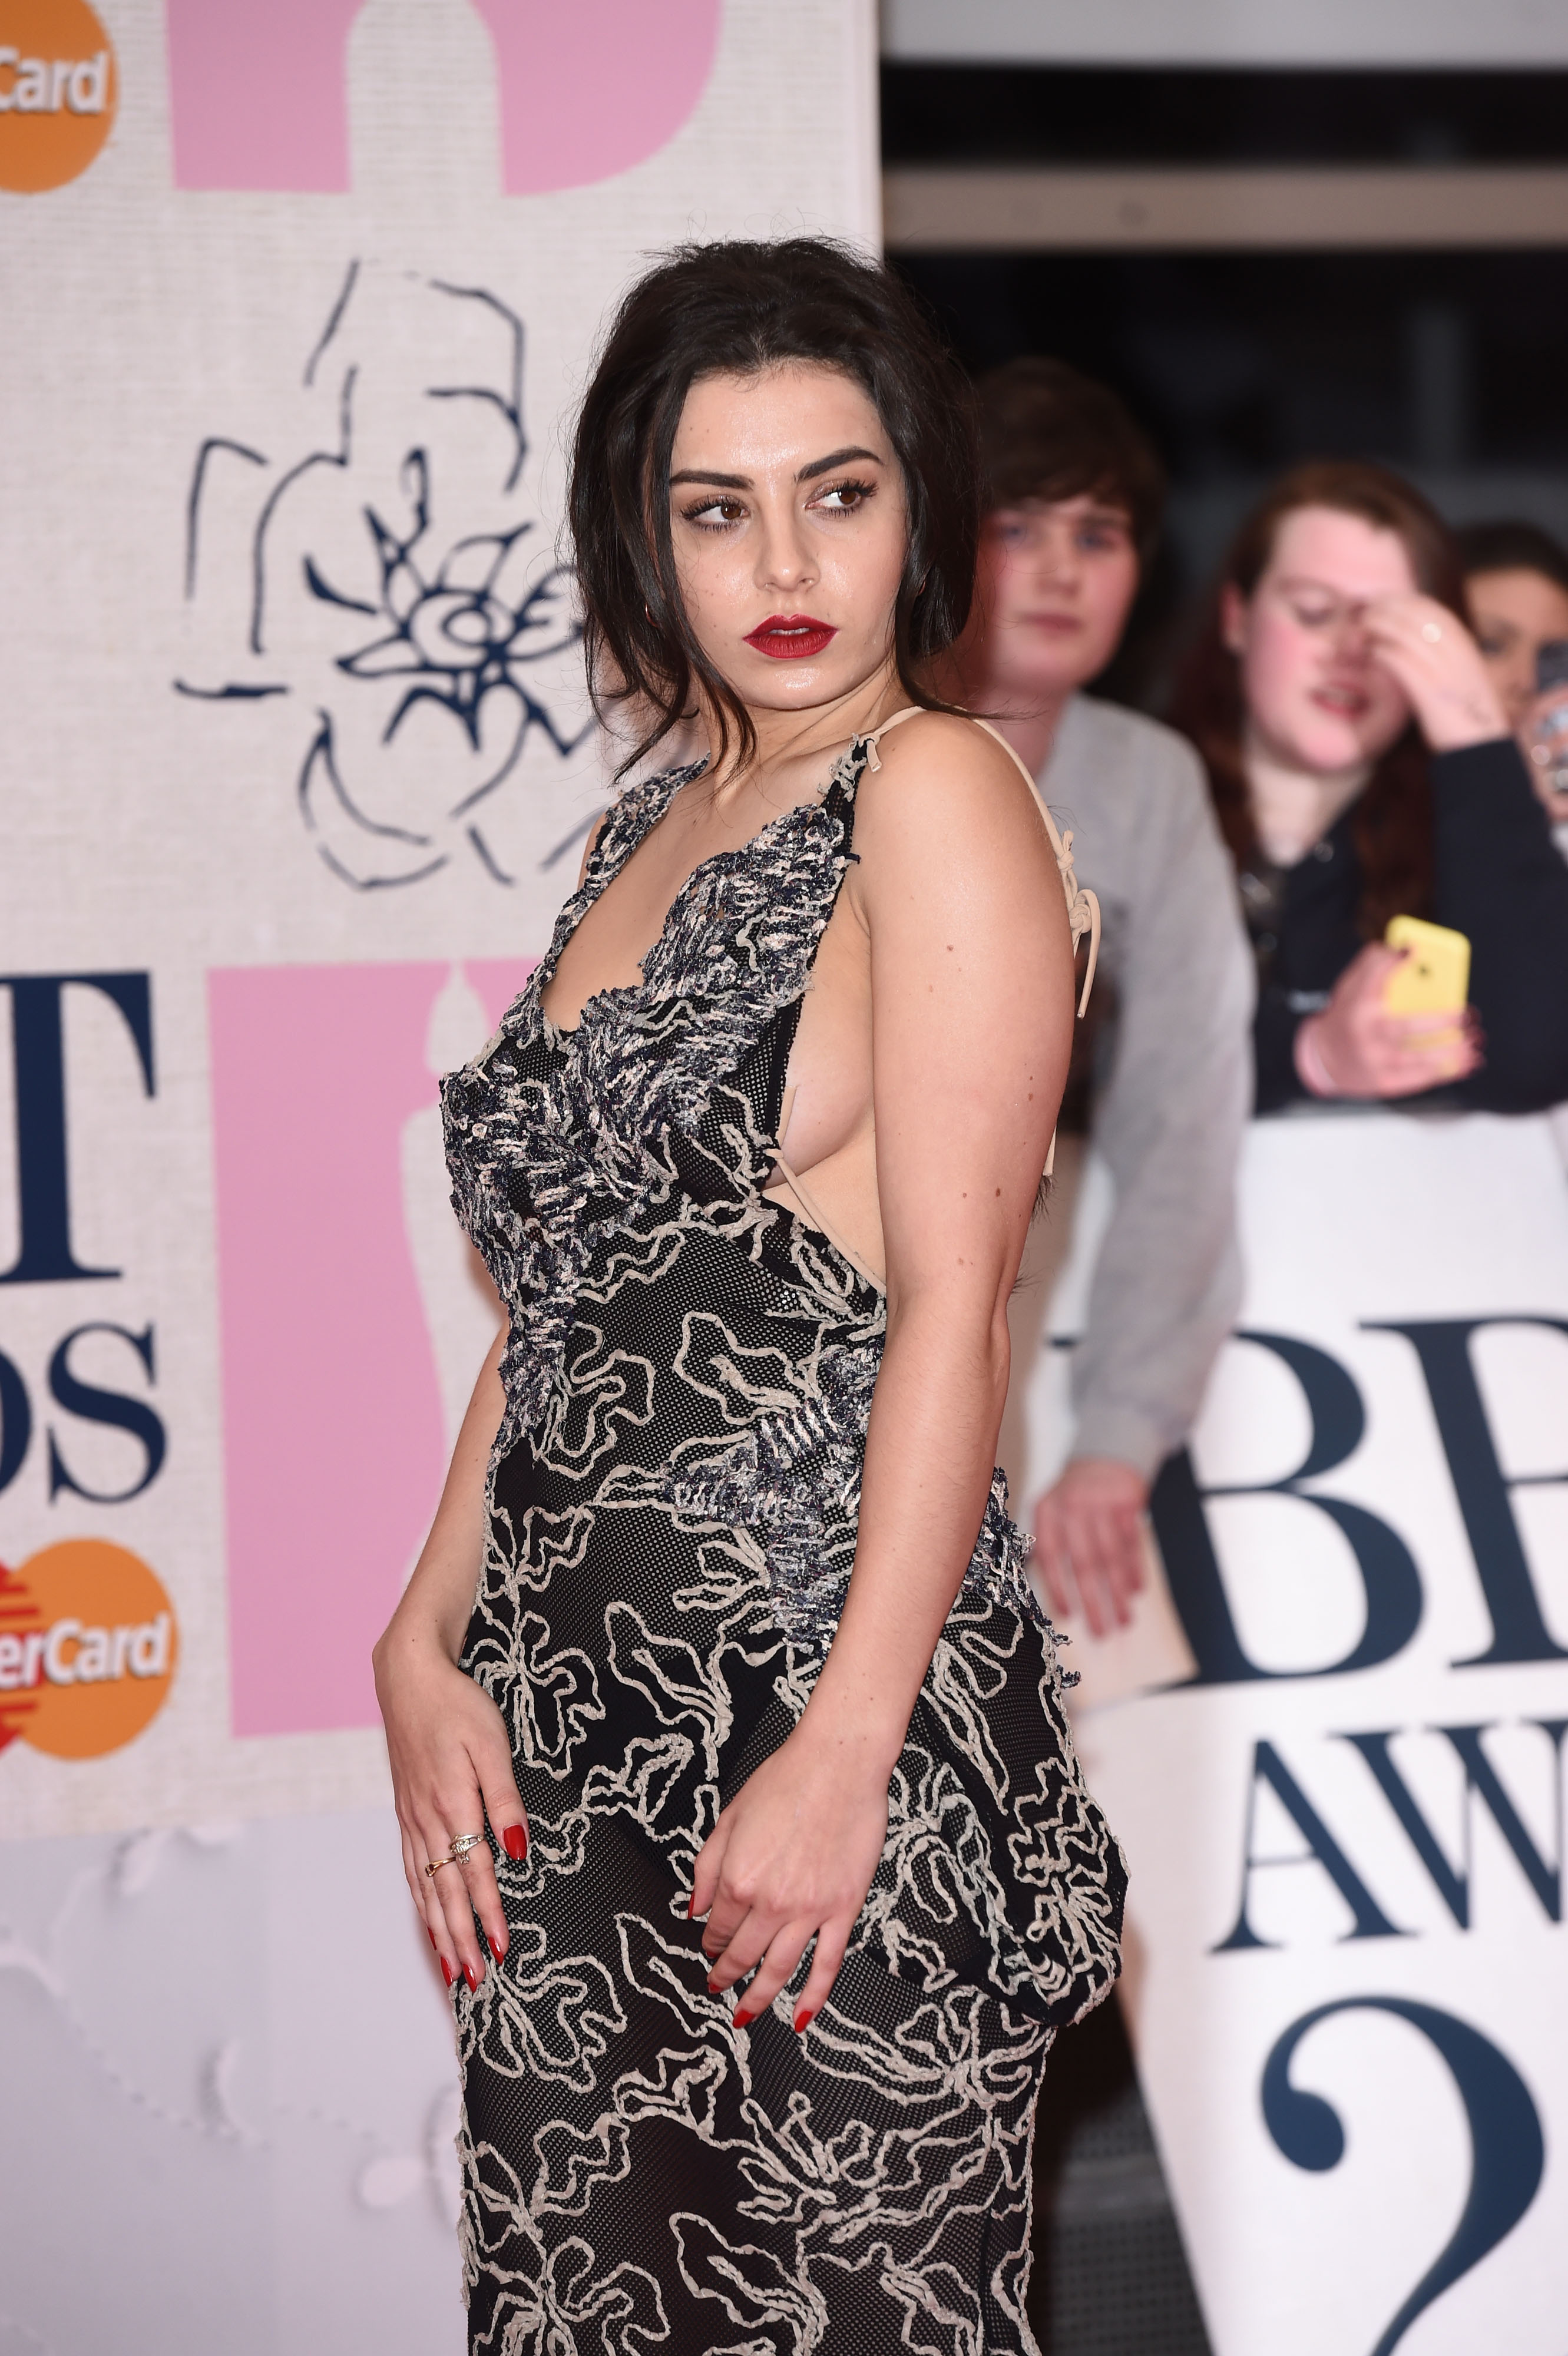 Charli_XCX_sideboobs_on_BRIT_Awards_red_carpet_18x_UHQ_20.jpg